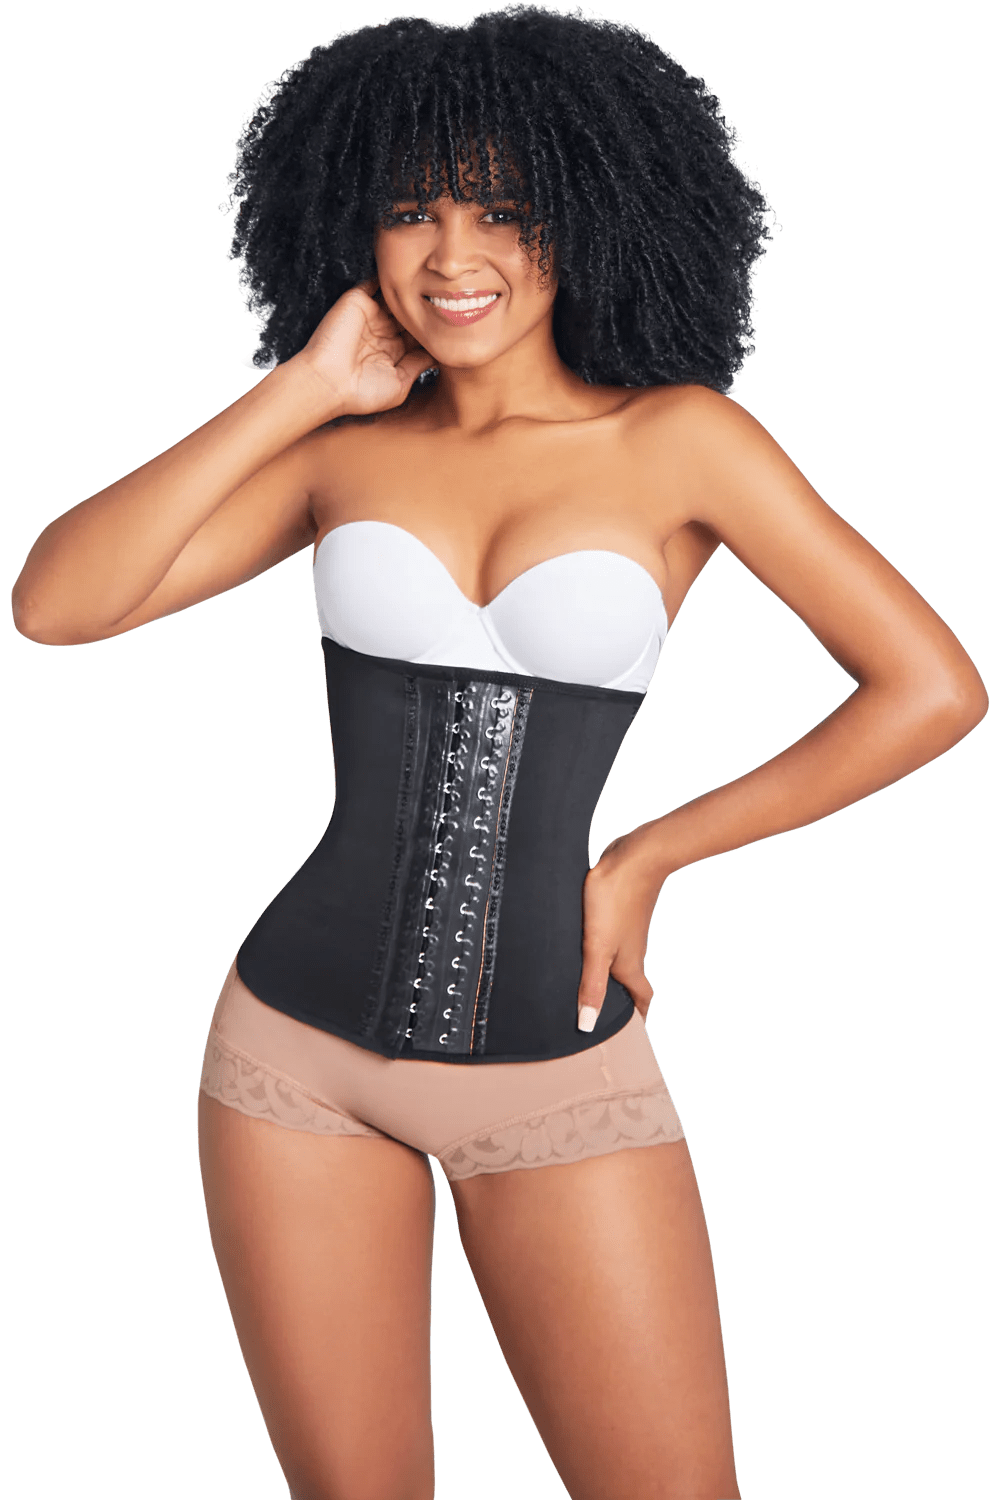 Fashion Adjustable Woman Colombian Slimming Girdles Flat Stomach Shapewear  Sheath Corset Waist Trainer Body Shapers Women's Binders @ Best Price  Online